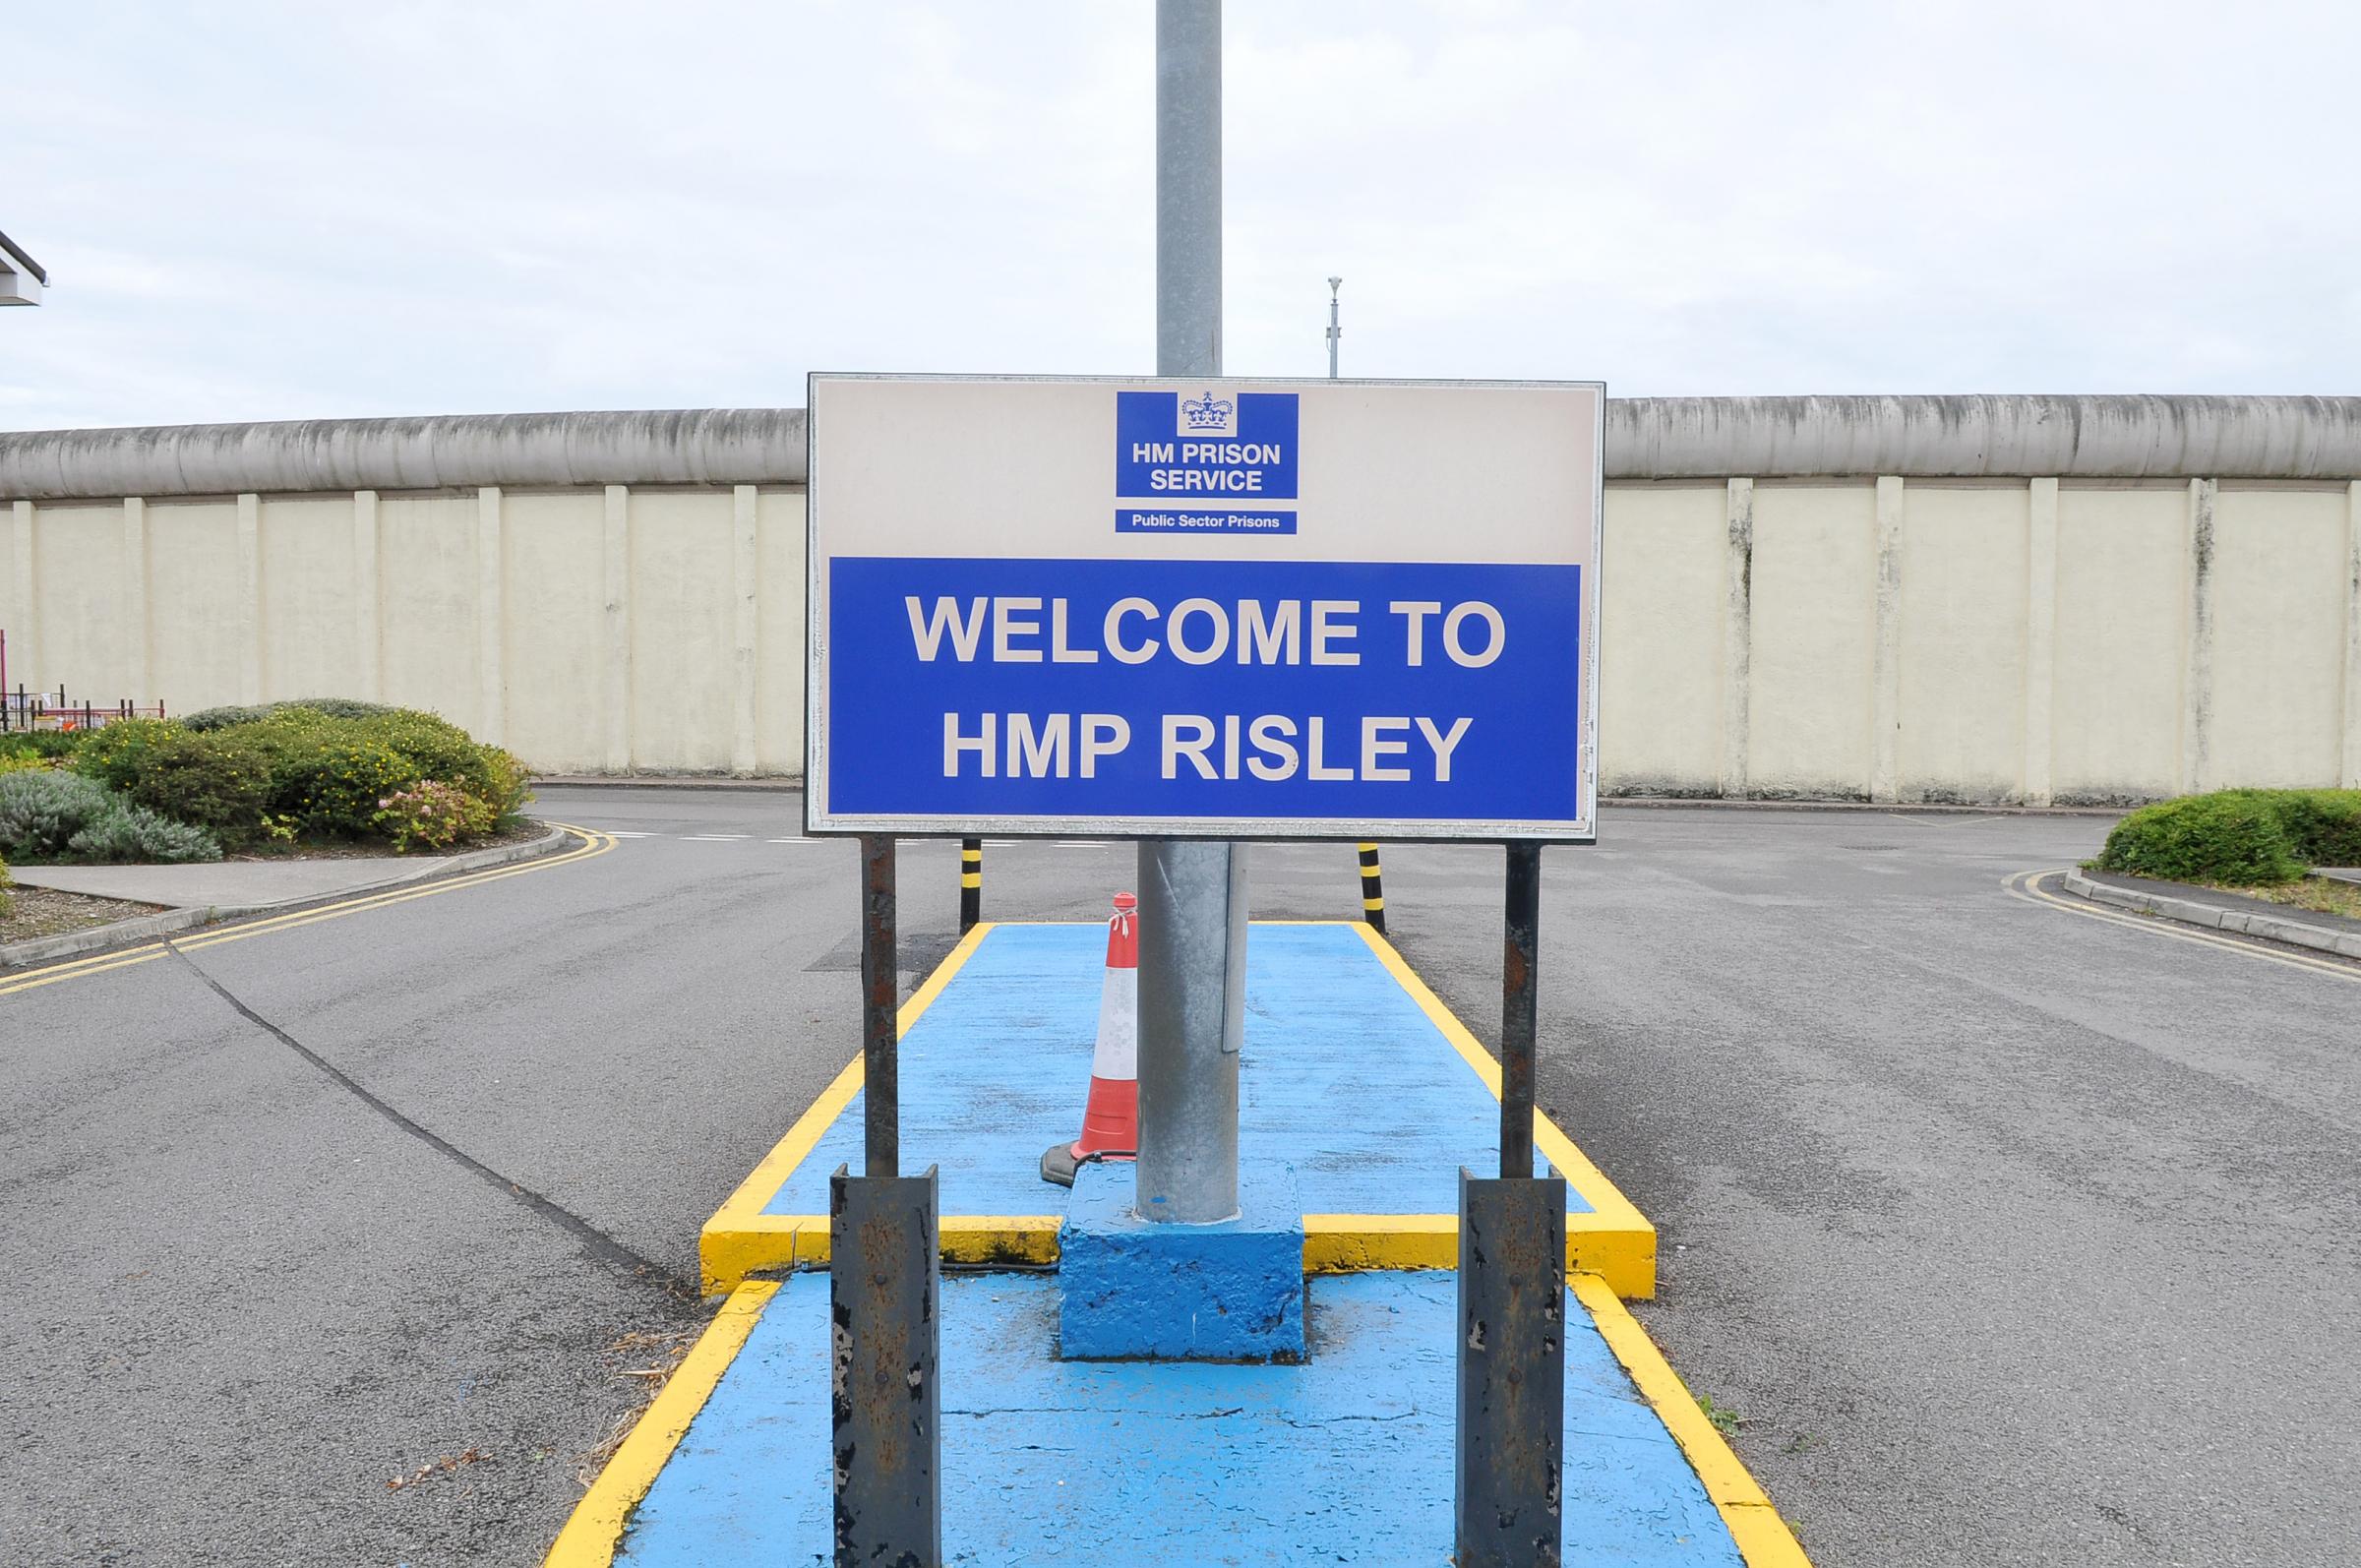 The plot centred around HM Prison Risley